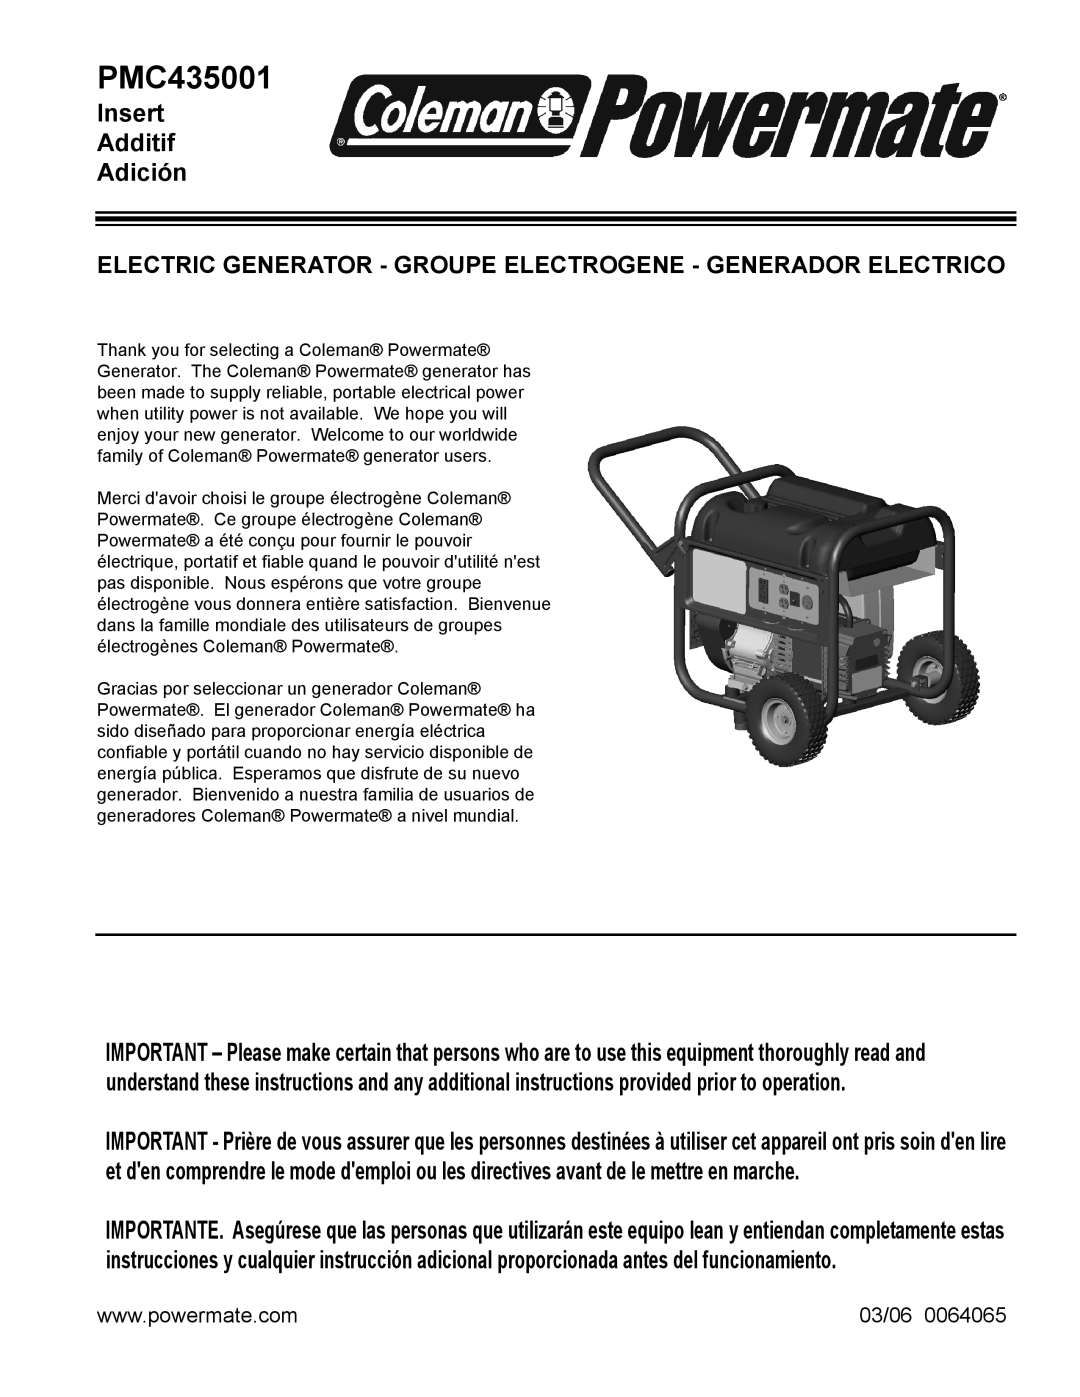 Powermate PMC435001 manual Insert Additif Adición, Electric Generator - Groupe Electrogene - Generador Electrico, 03/06 